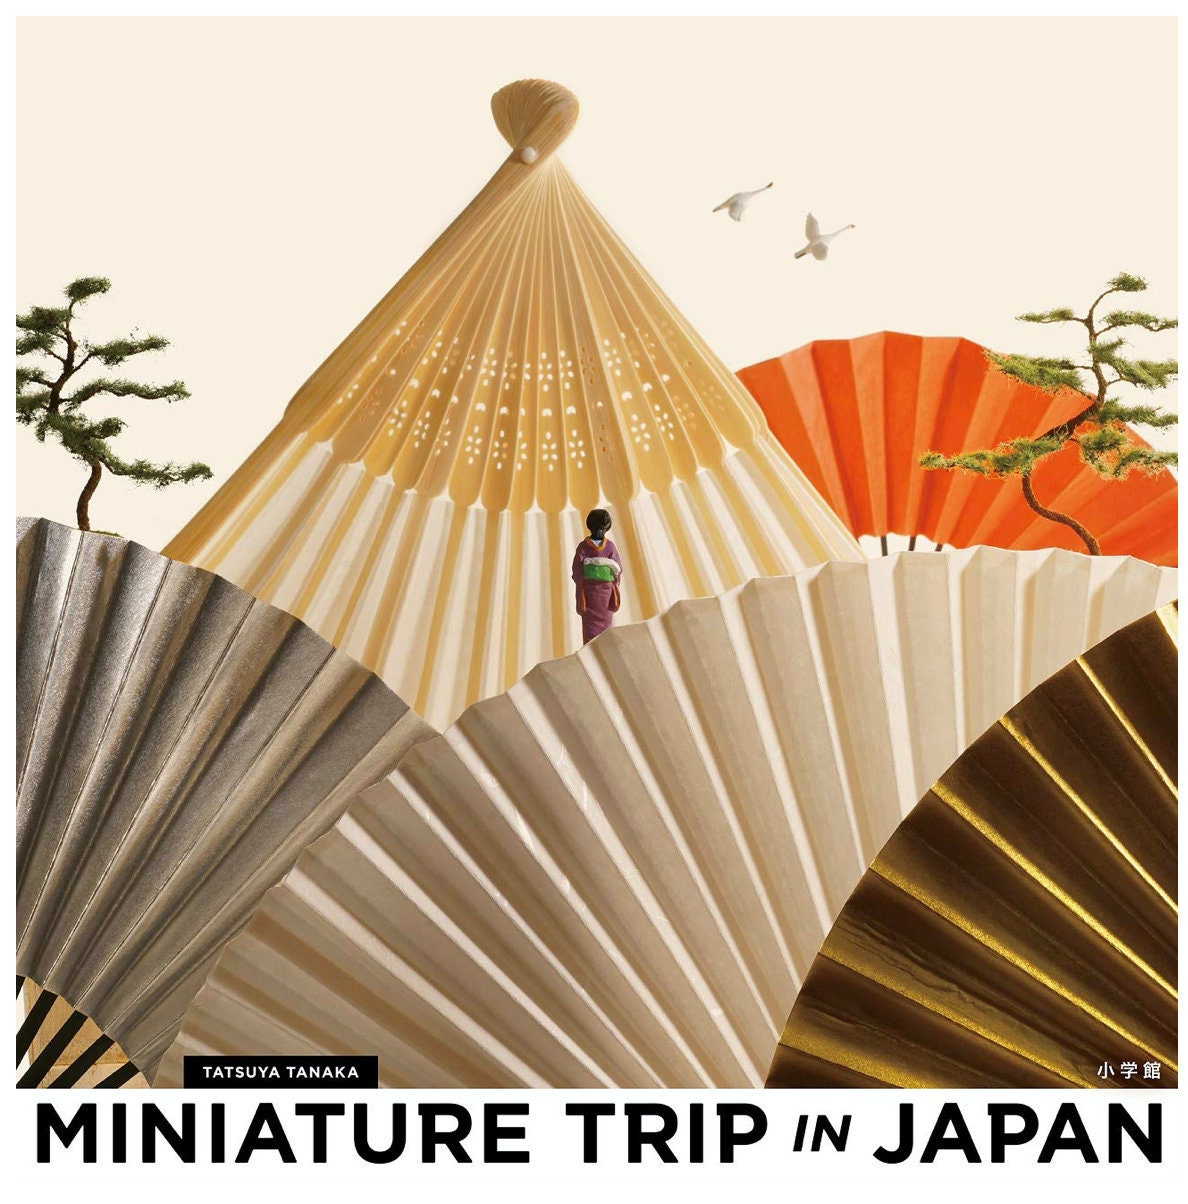 explore the intricate miniature worlds of japanese artist tatsuya